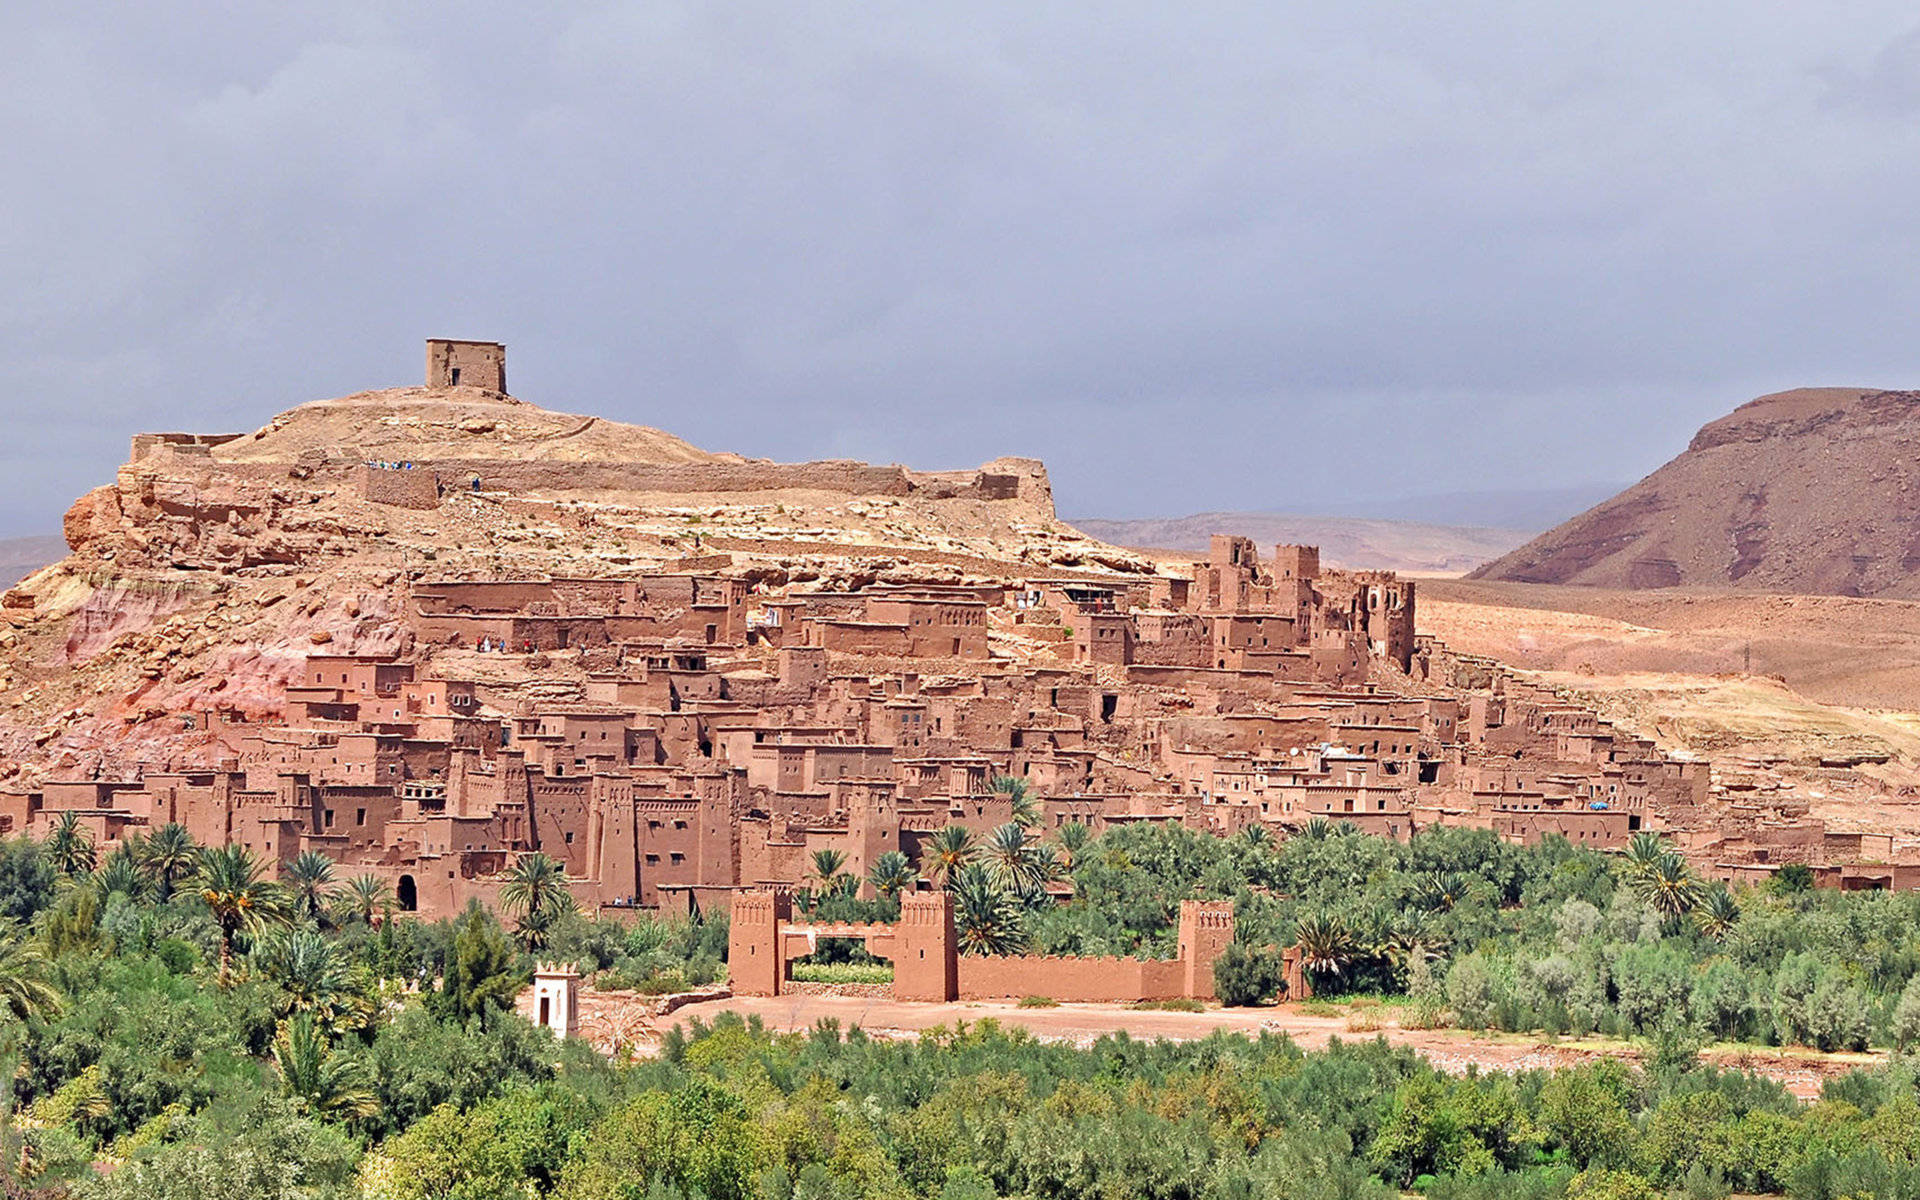 Full day trip from Marrakech to Ait Benhaddou & Ouarzazate